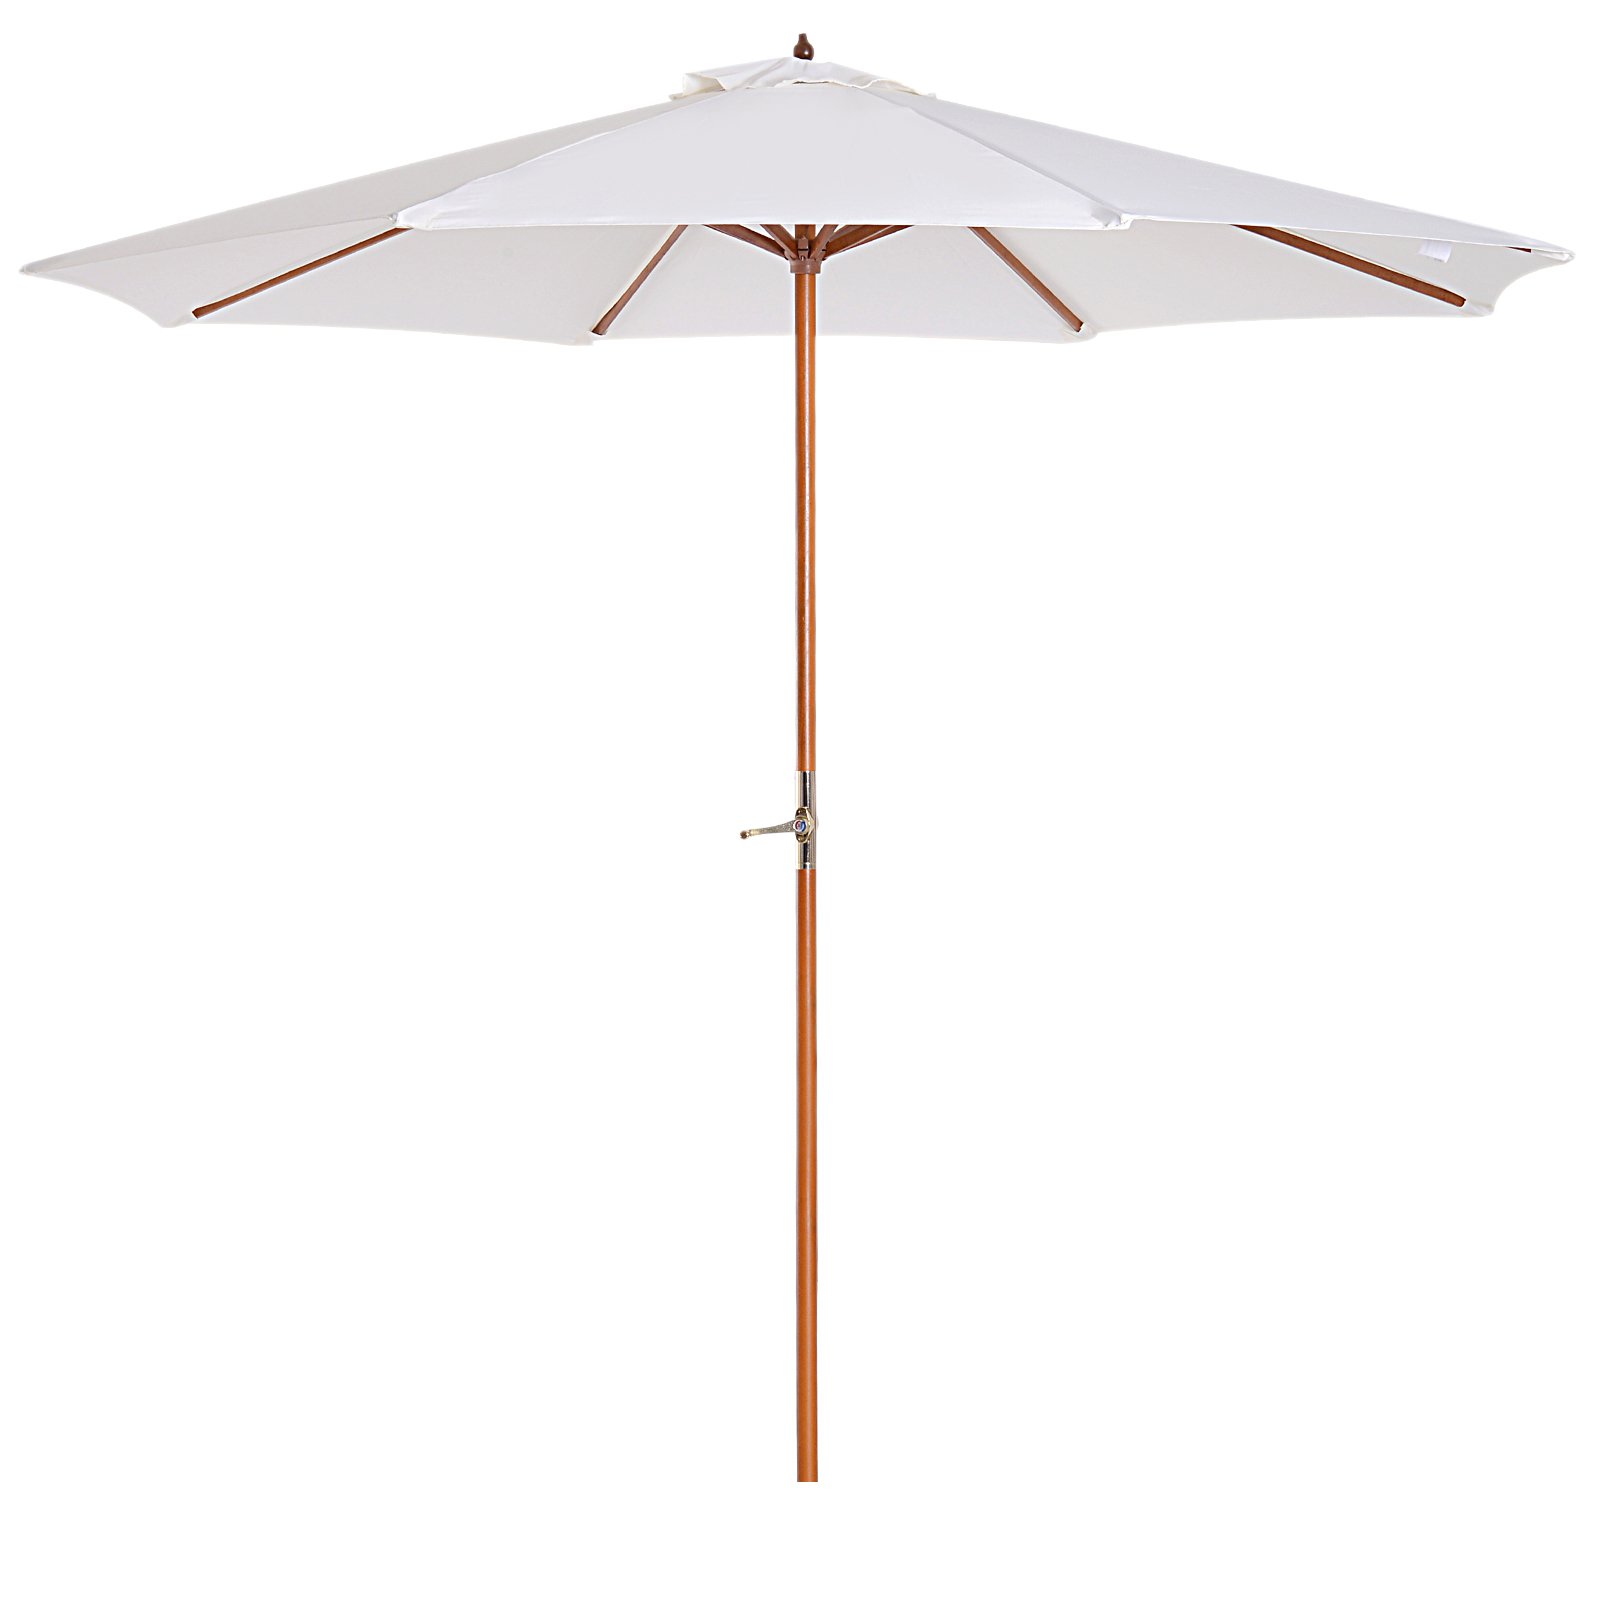 Nancy's Buckeye Parasol - Garden umbrella - Wood - Market umbrella - White - Ø 270 cm